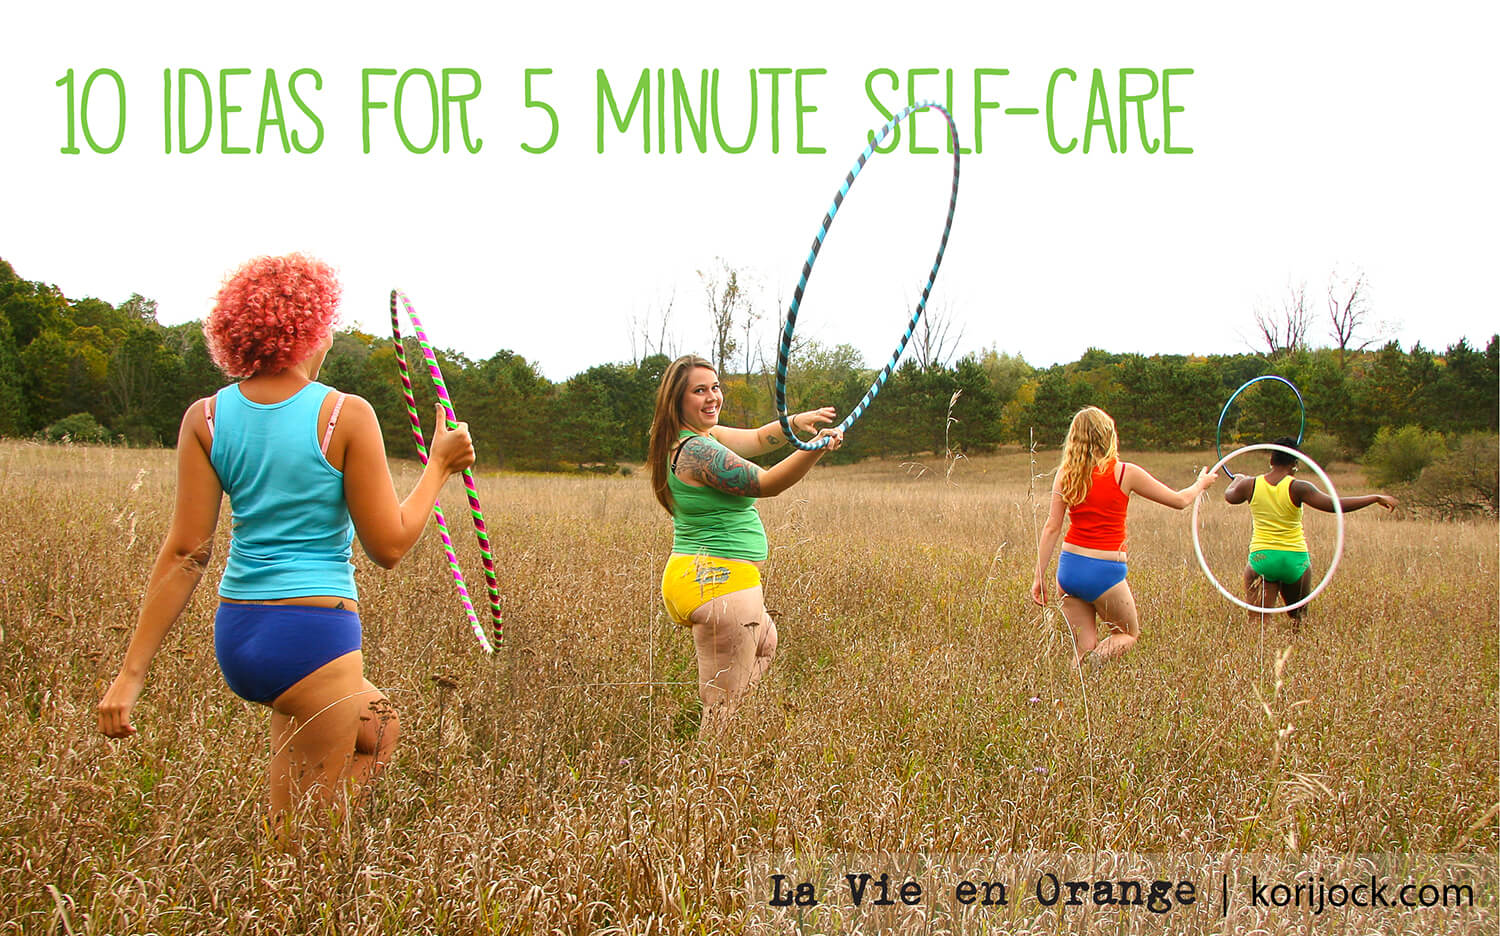 4 undies clad girls carry hula hoops in a field; overlay text reads "10 ideas for 5 minute self care" | La Vie en Orange